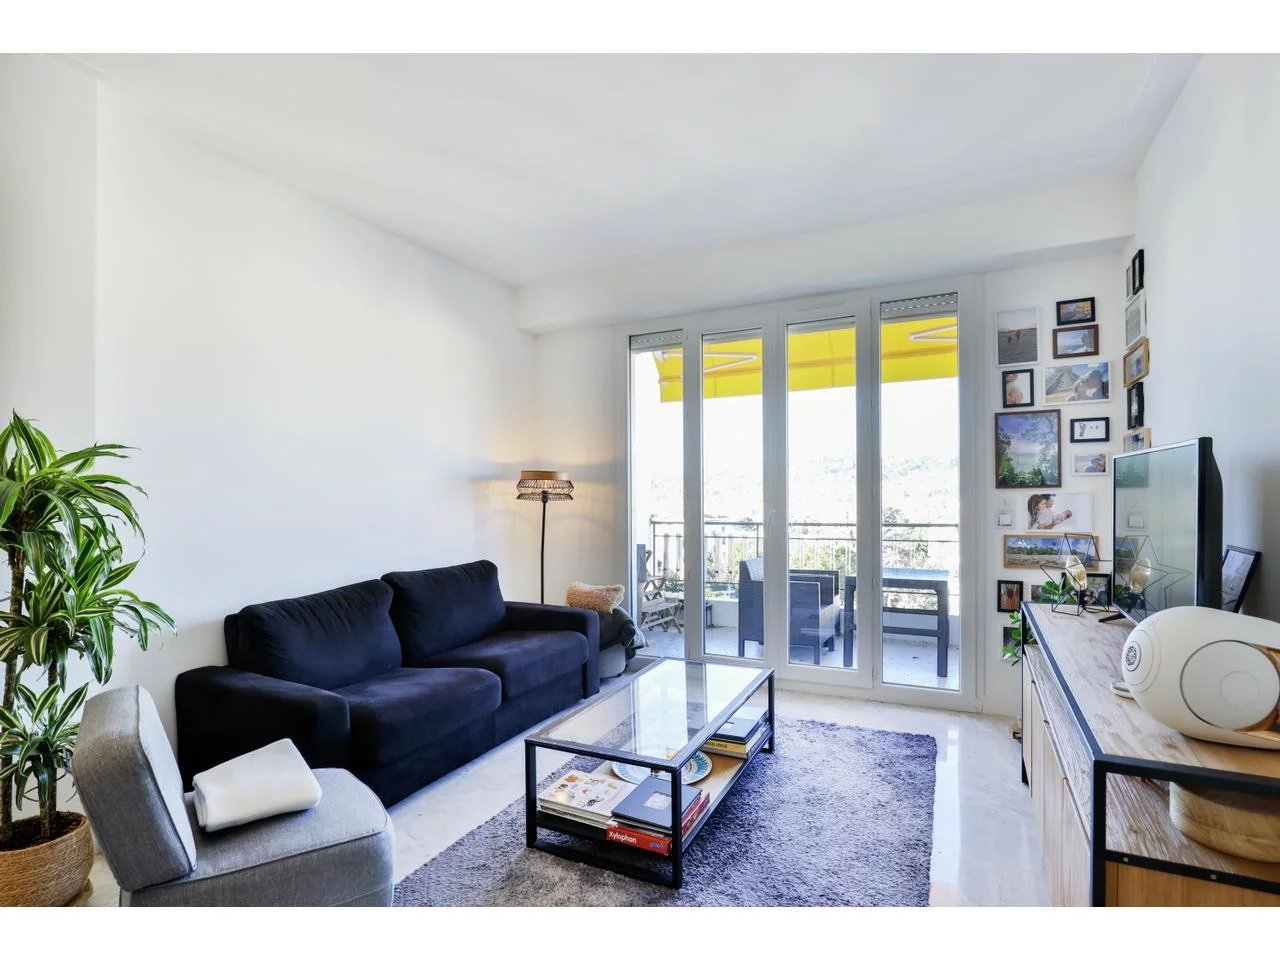 Appartement  4 Locali 86.03m2  In vendita   650 000 €